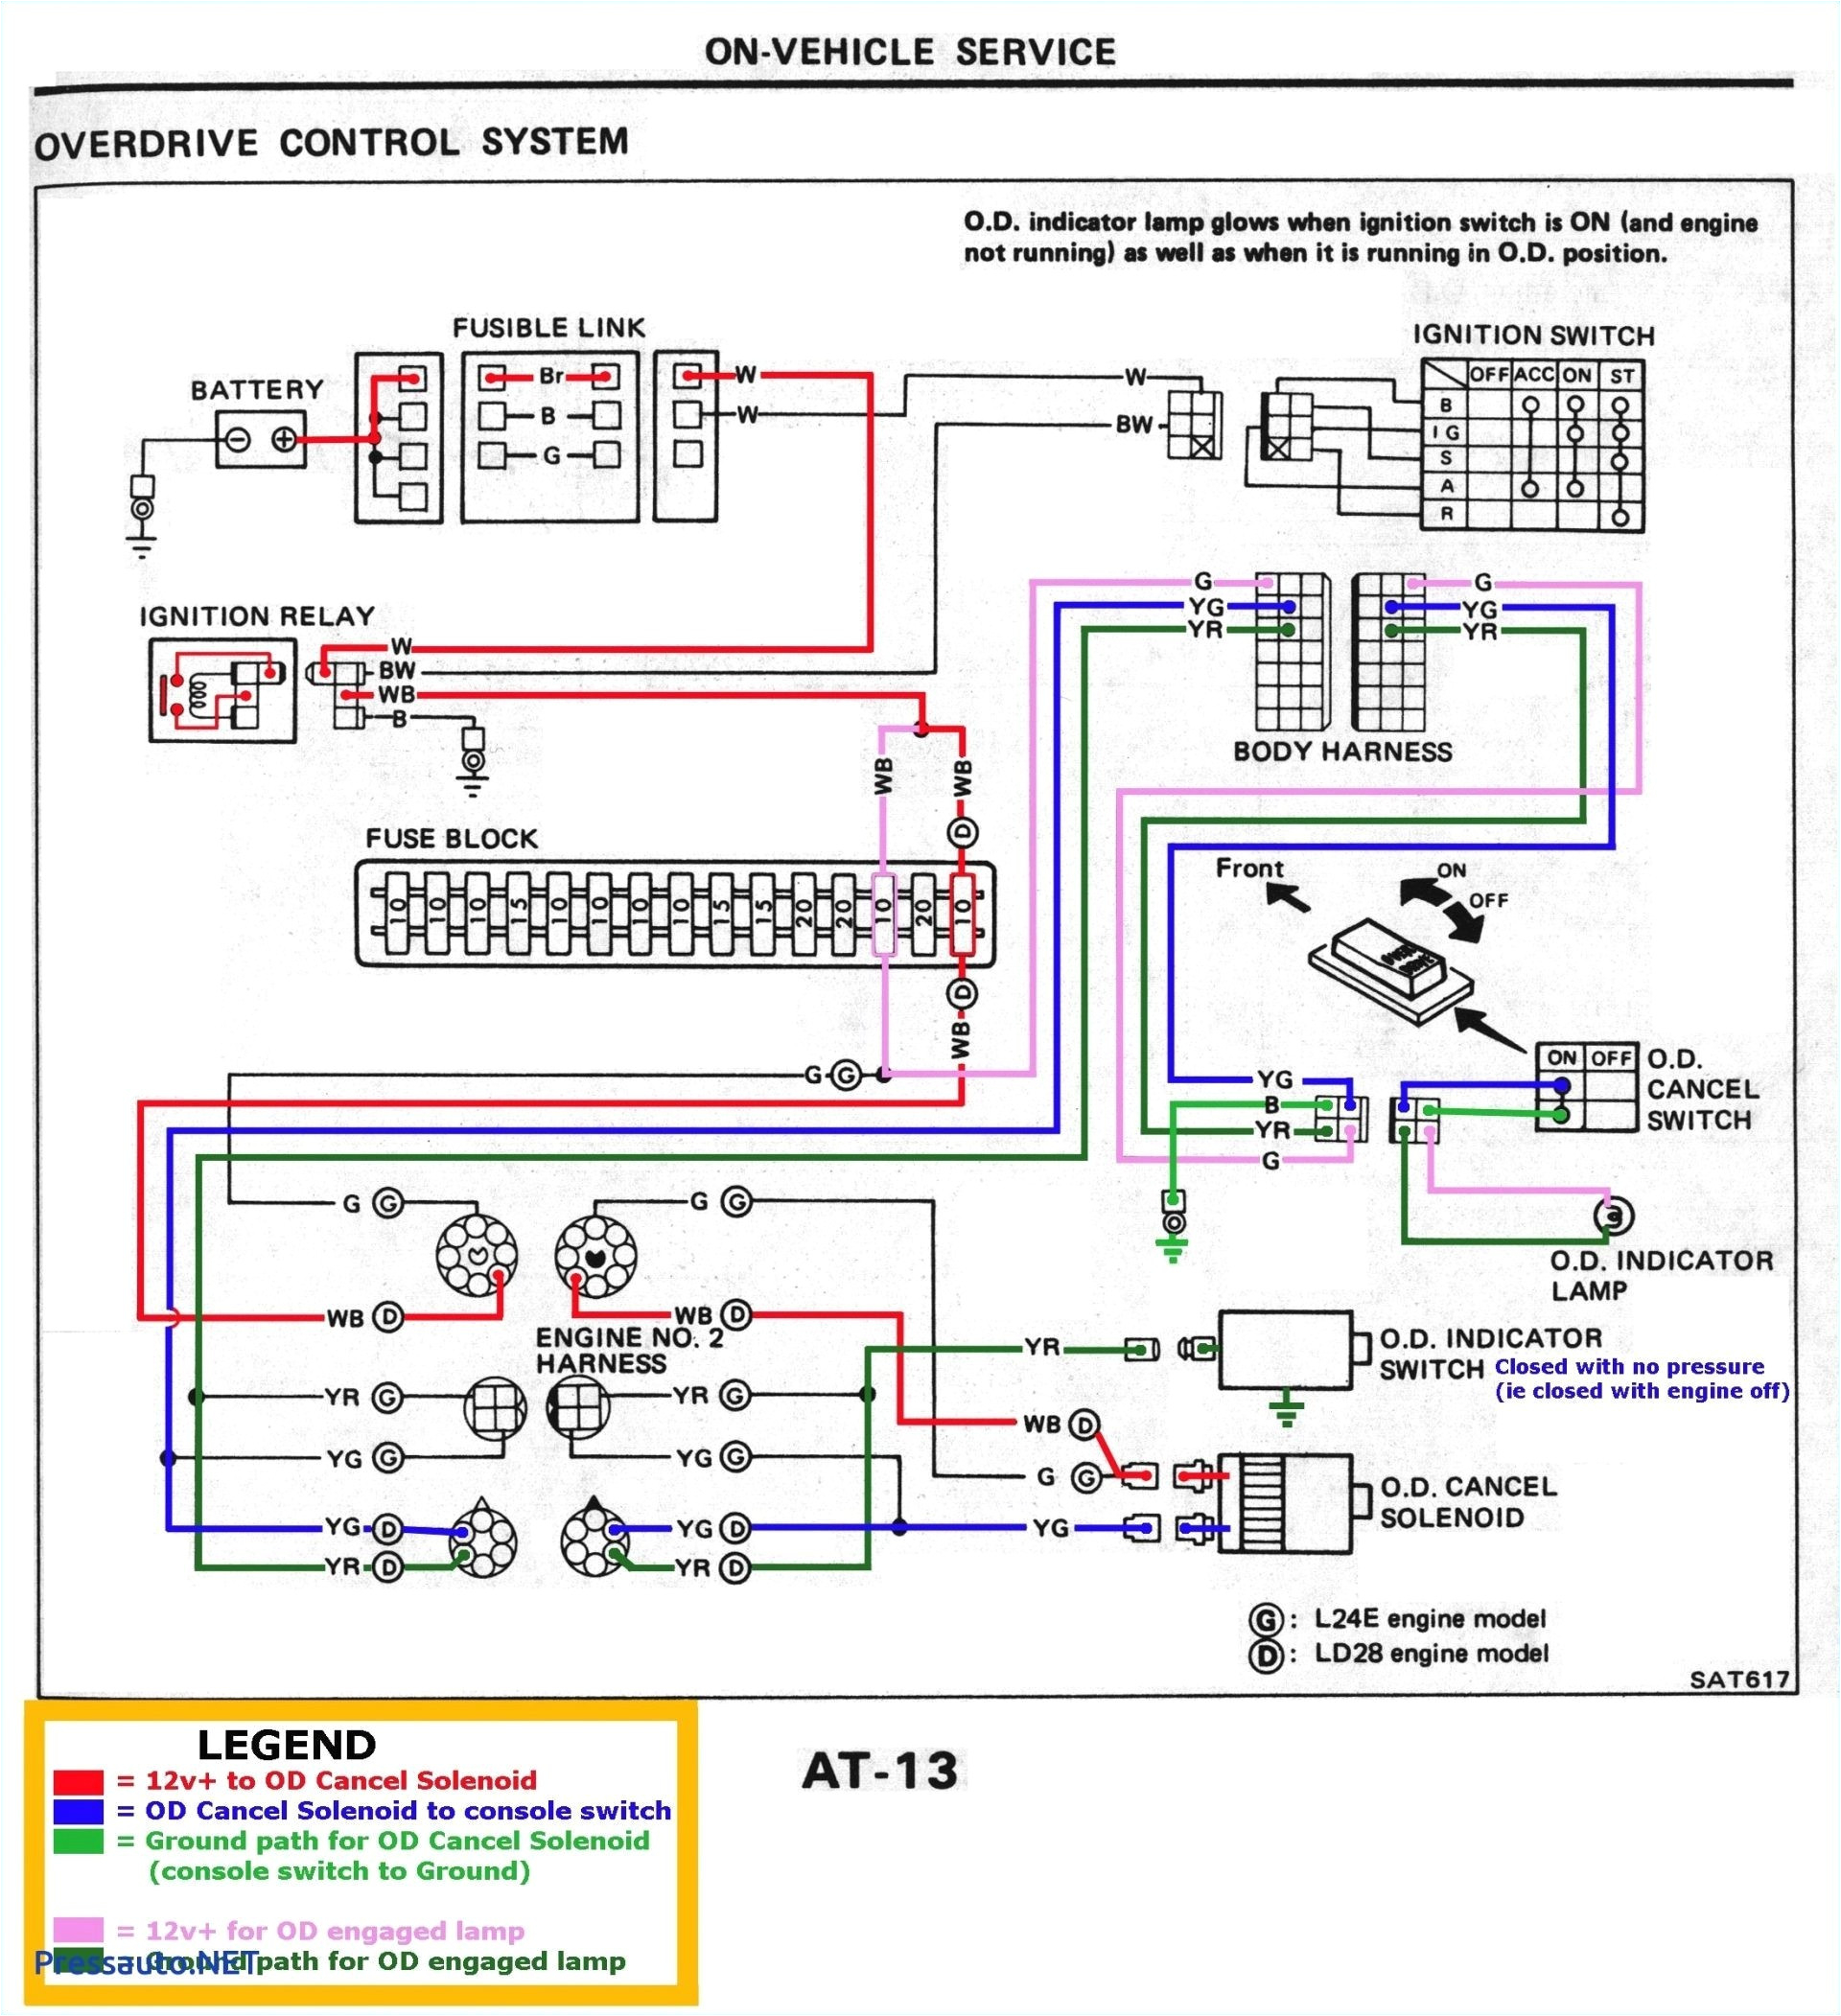 motor wiring diagram single phase awesome baldor motor wiring diagrams single phase electrical circuit jpg